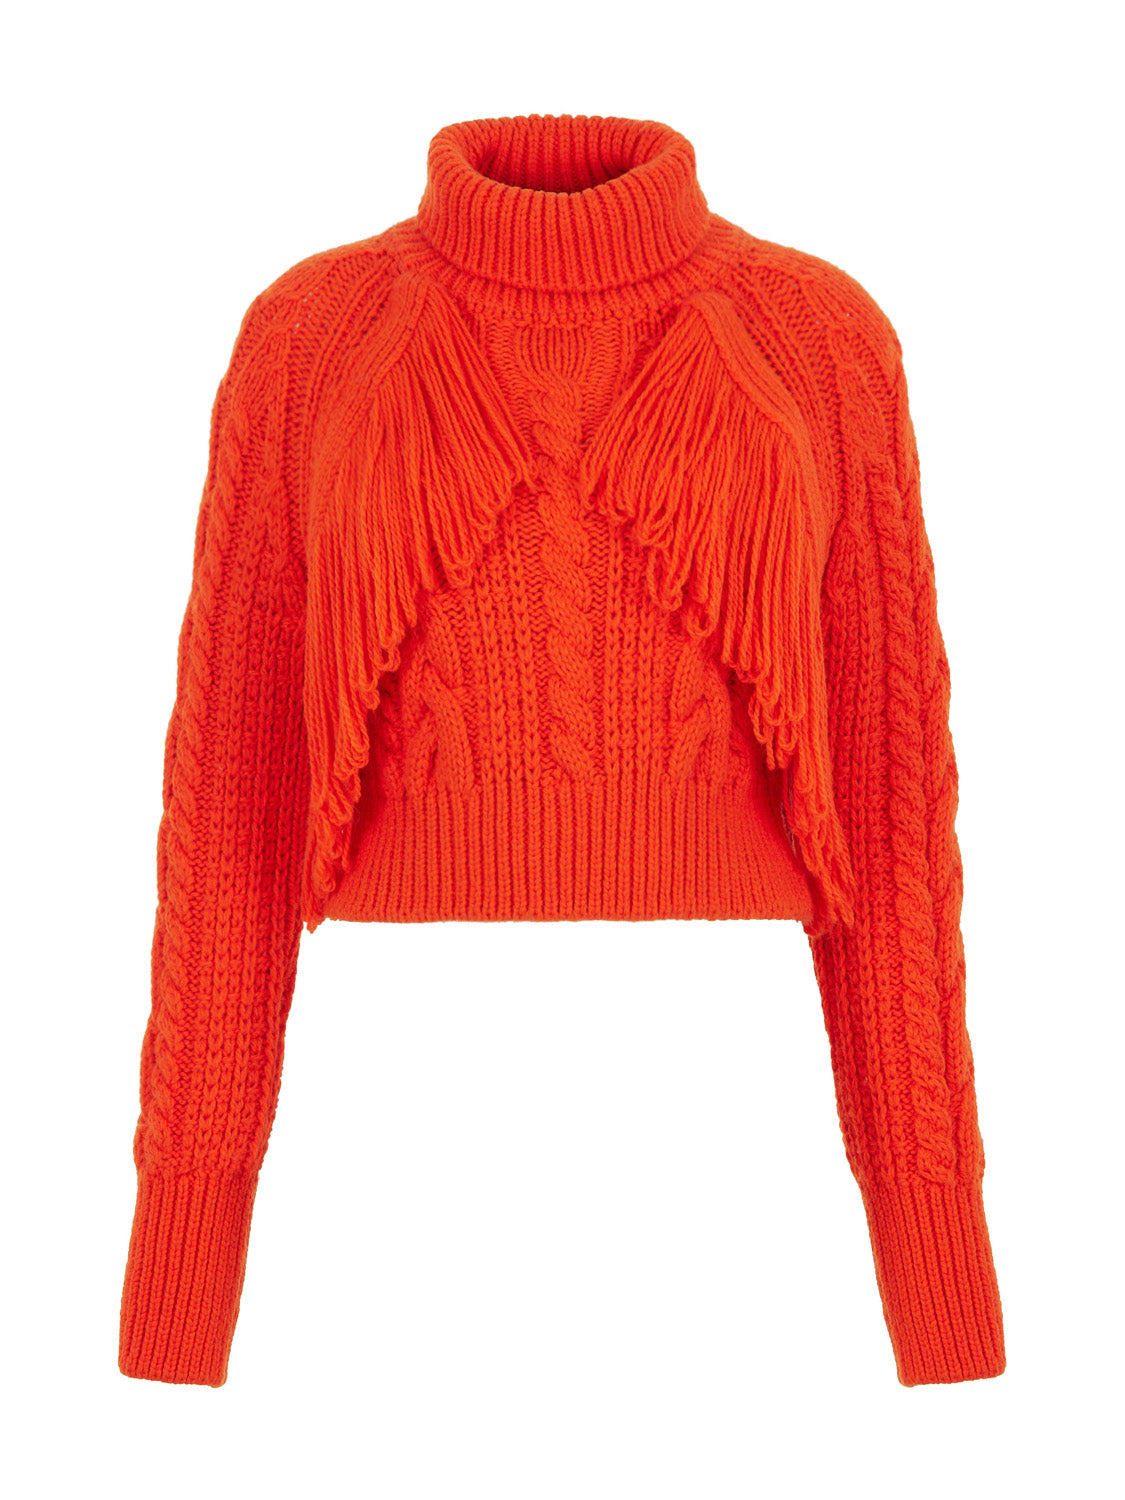 Nocturne Women's Red Fringe Knit Sweater